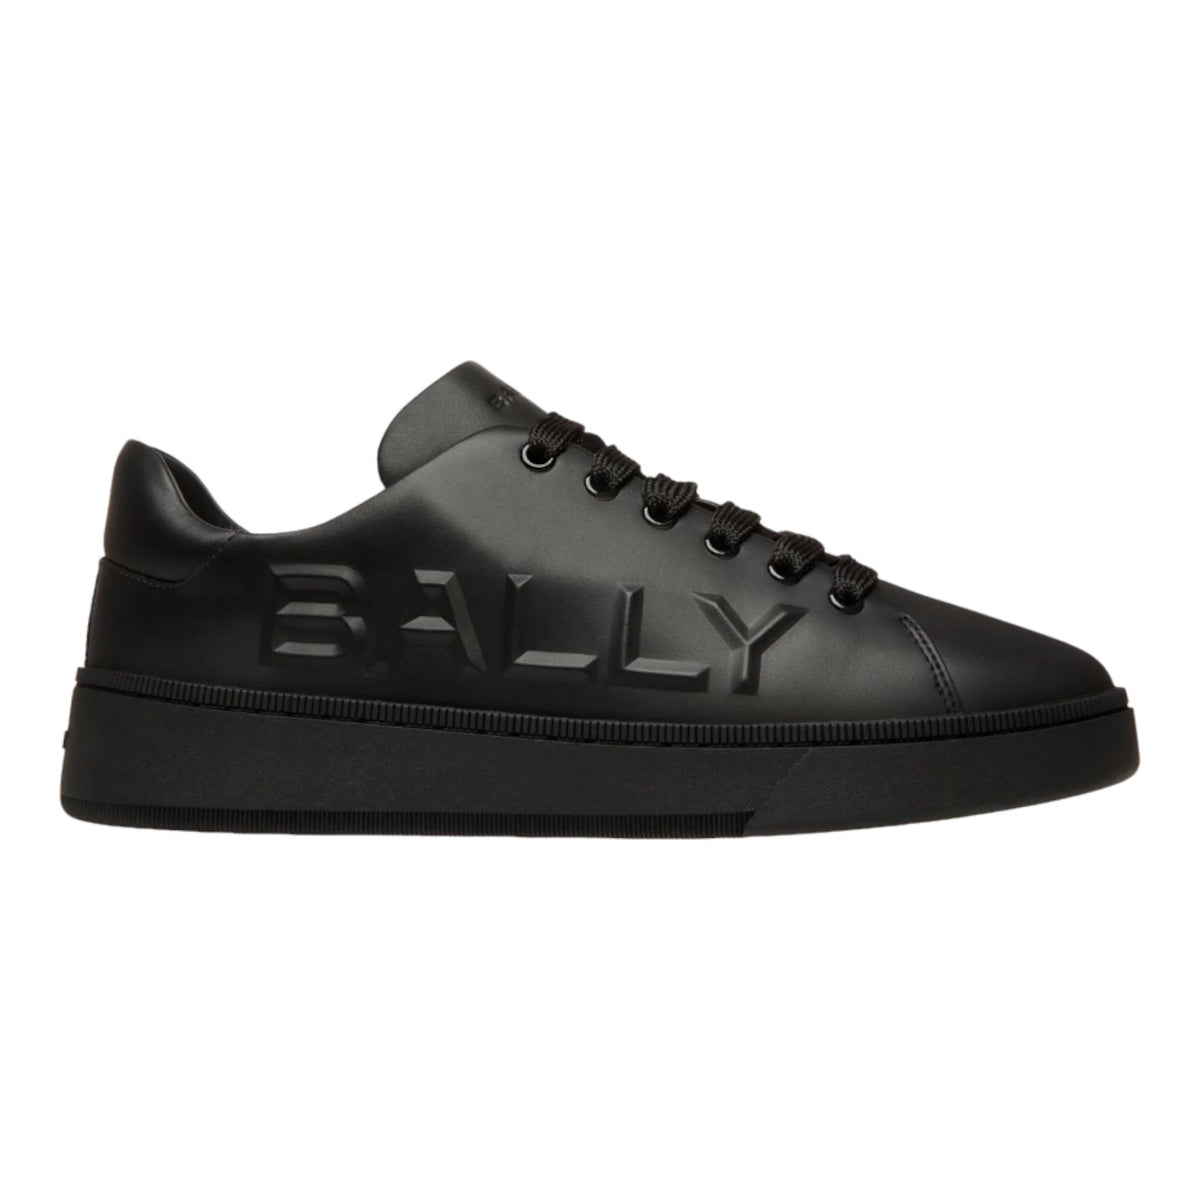 Bally Men's Reka Raise Sneaker in Black Leather